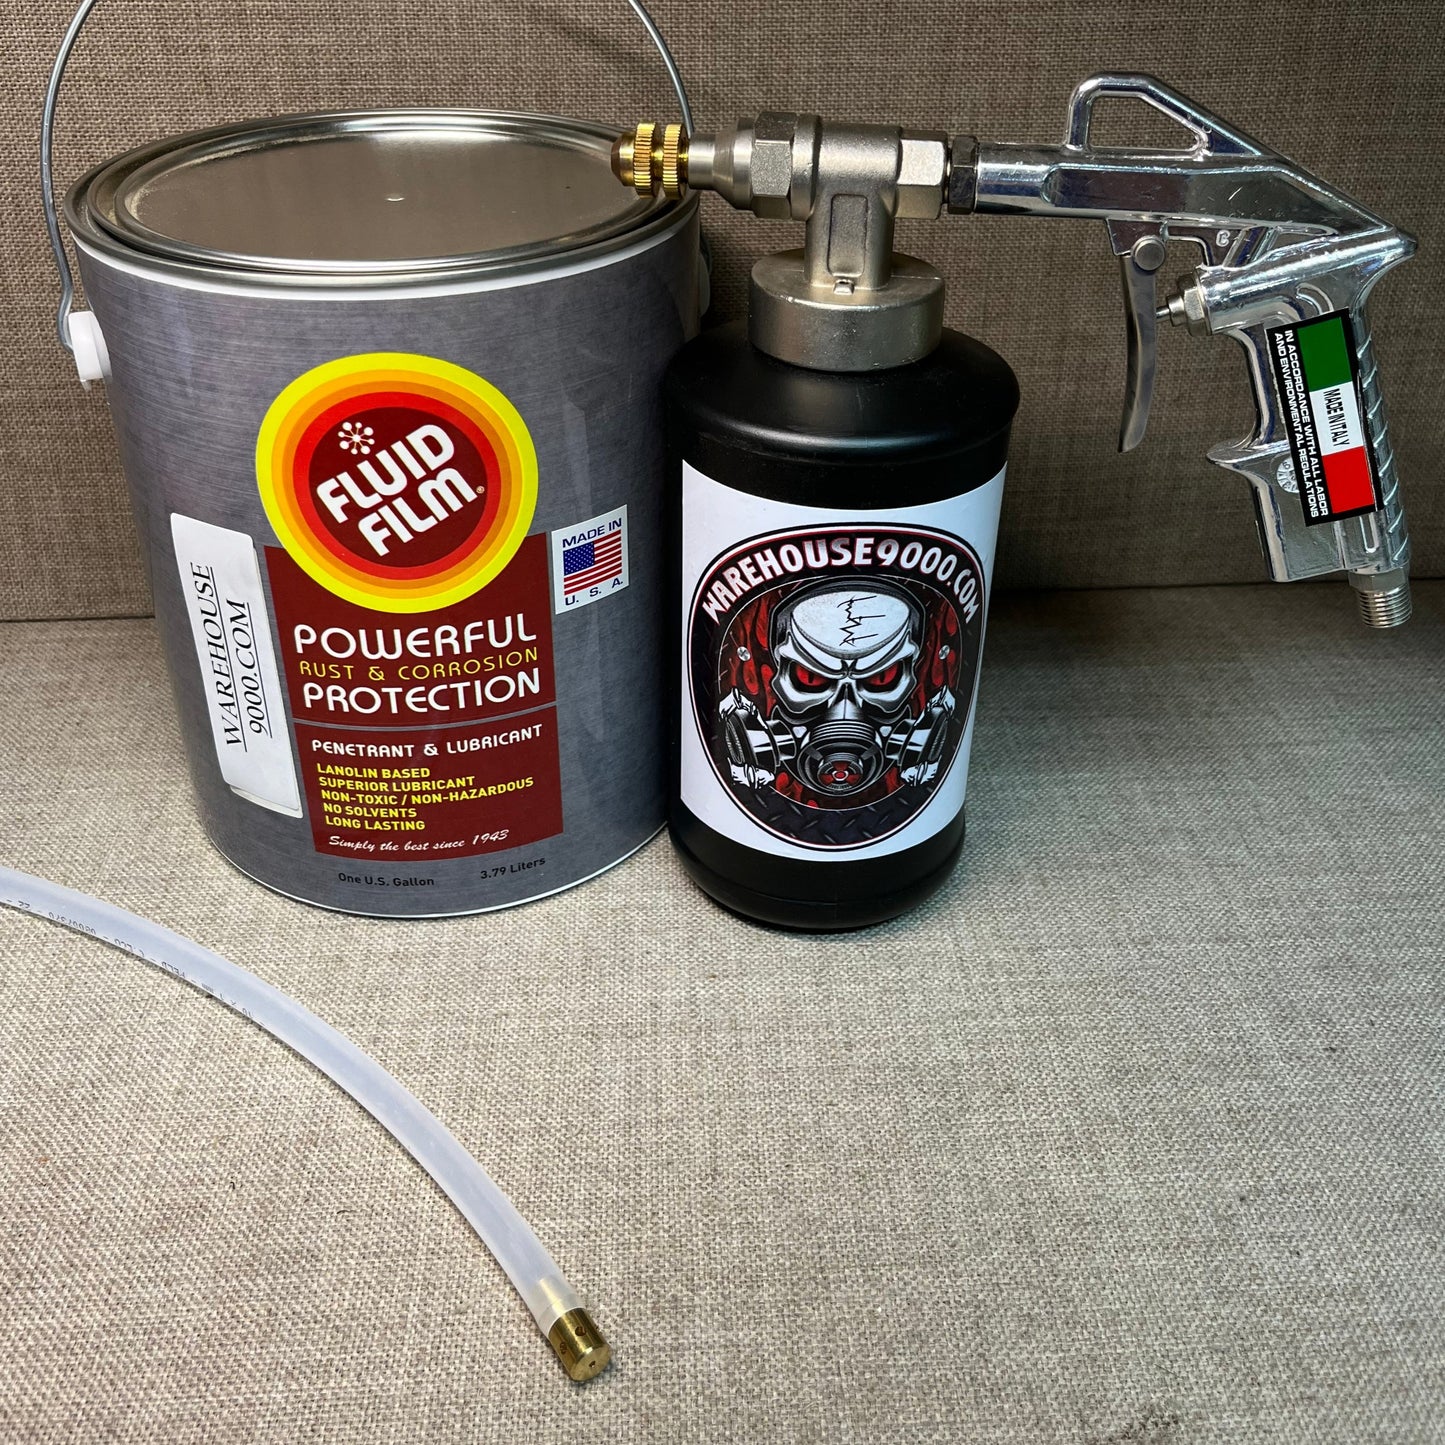 Gallon Fluid Film Amber, Pro Undercoating Spray Gun, 360* Spray Wand, 1 Quart Bottle, and 50 Rust Plugs